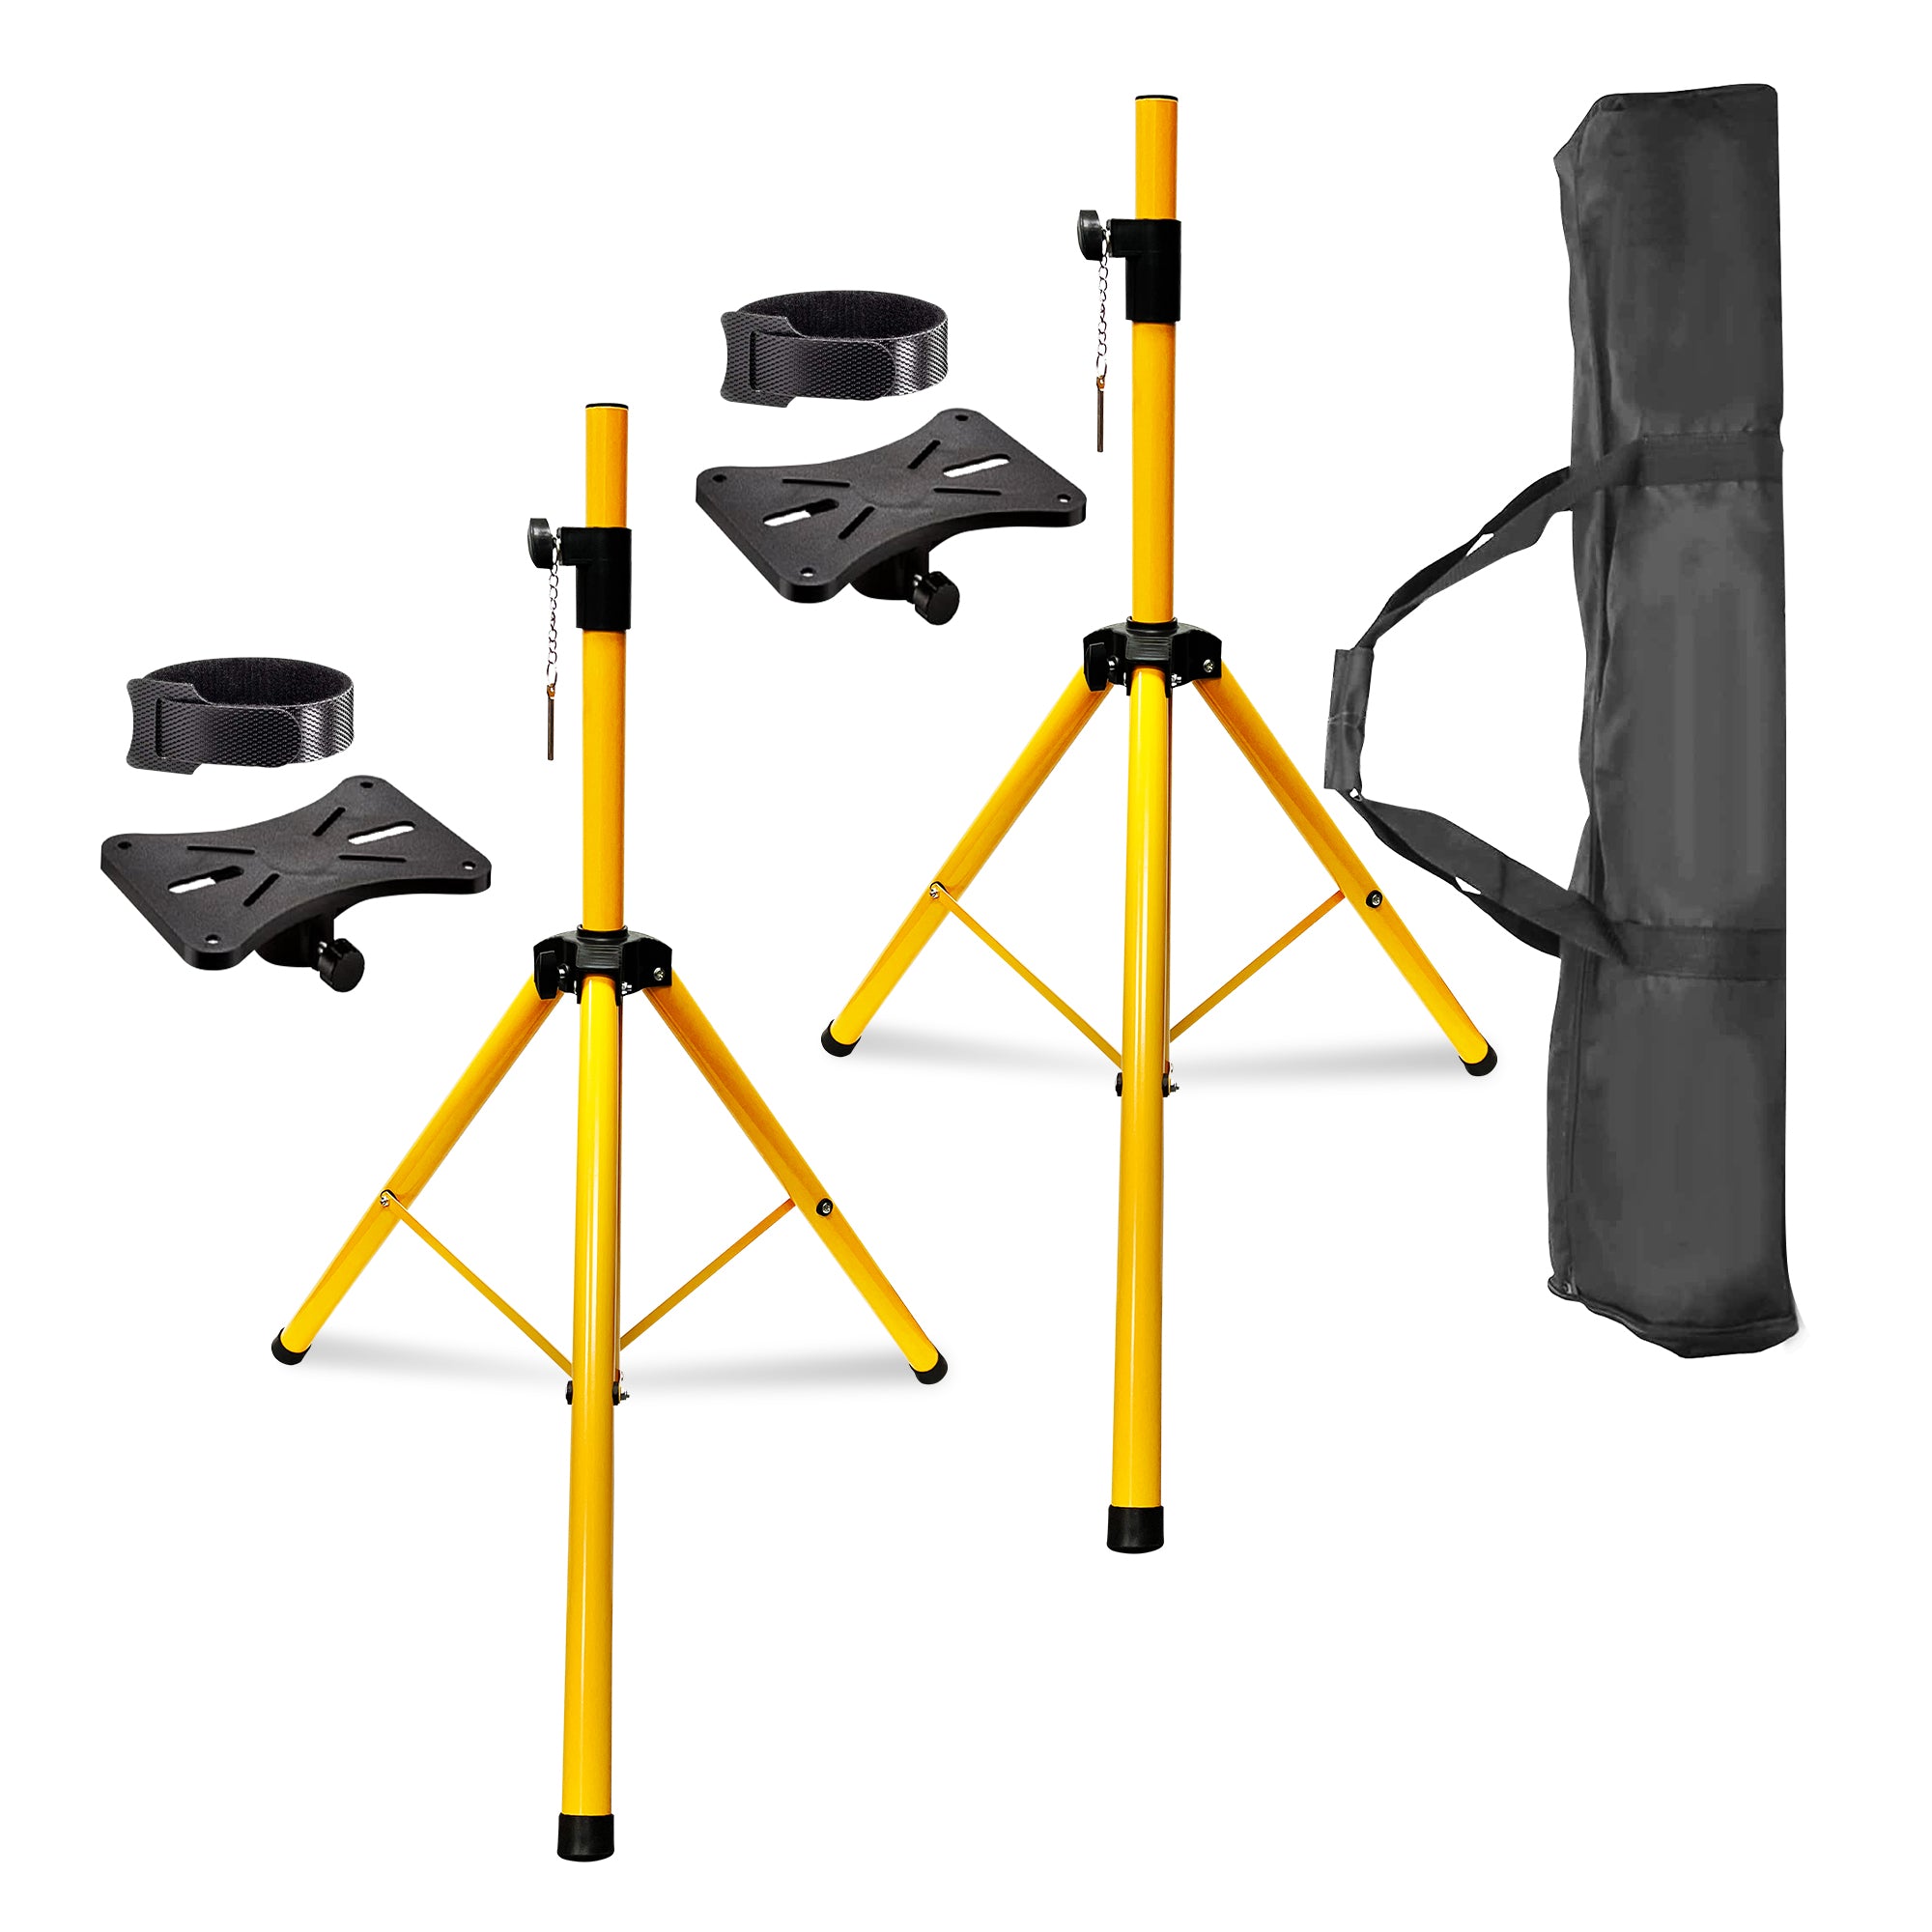 5Core Speaker Stand Tripod Tall Heavy Duty DJ Studio Monitor stands 72" Pole Mount Yellow w Bag 1/2 Pc